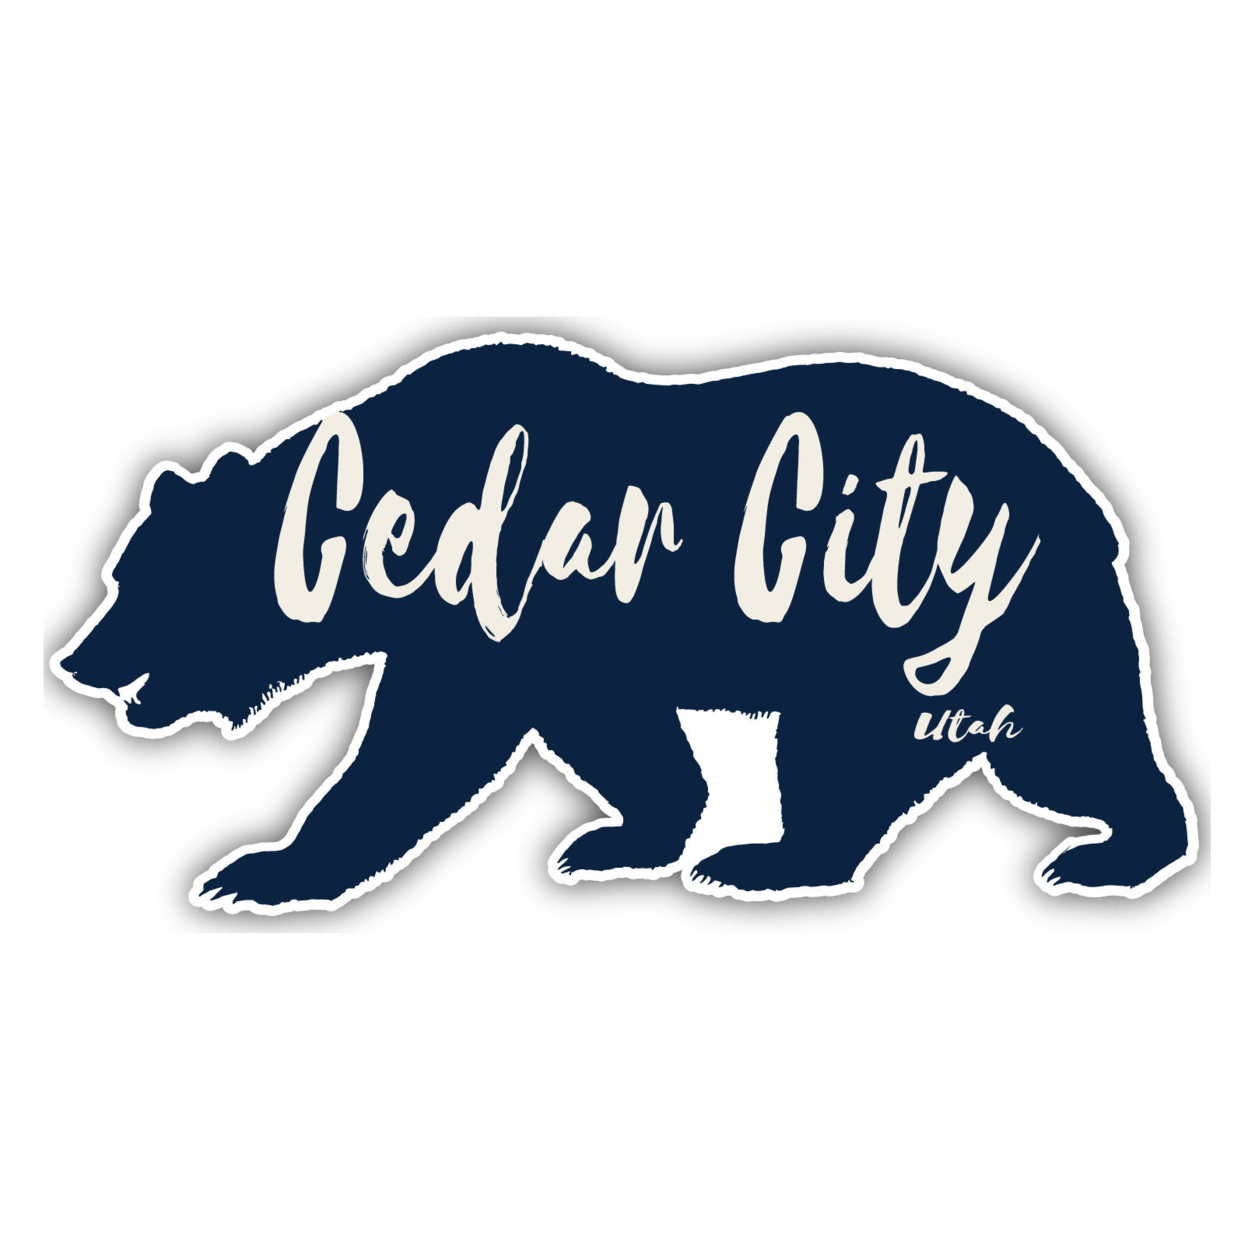 Cedar City Utah Souvenir Decorative Stickers (Choose Theme And Size) - Single Unit, 10-Inch, Bear